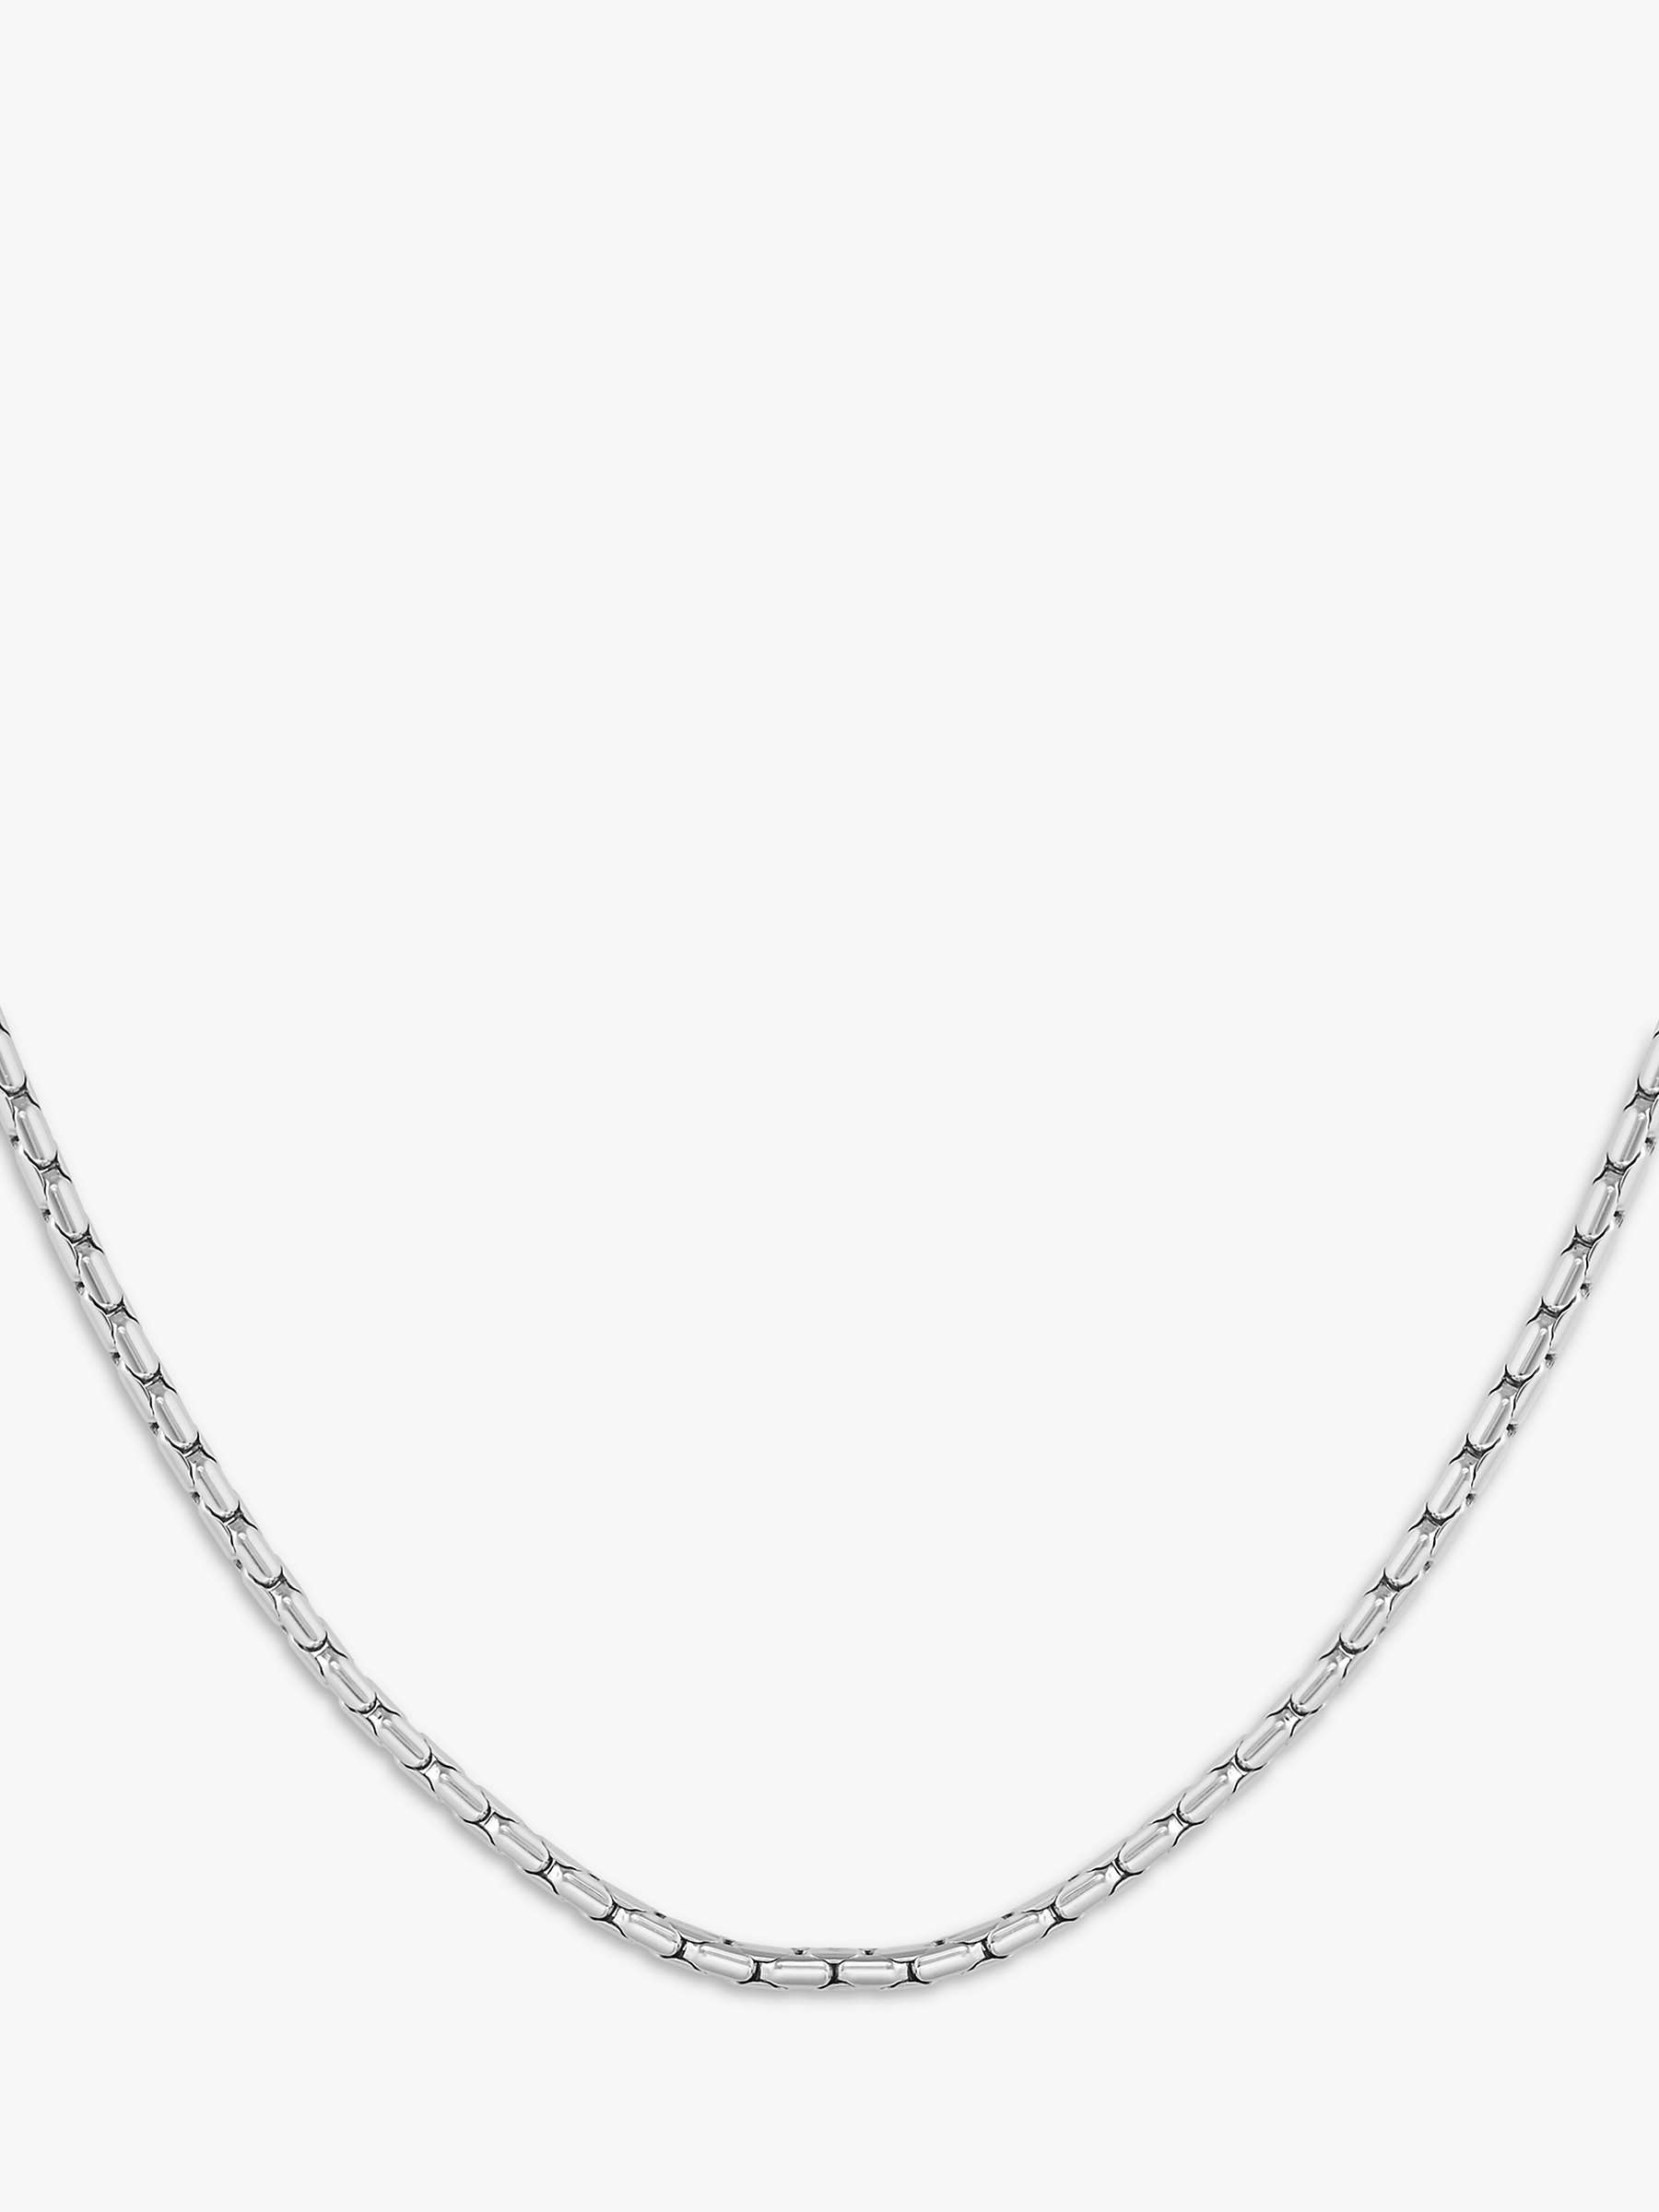 Buy HUGO BOSS Men's Evan Chain Necklace, Silver Online at johnlewis.com